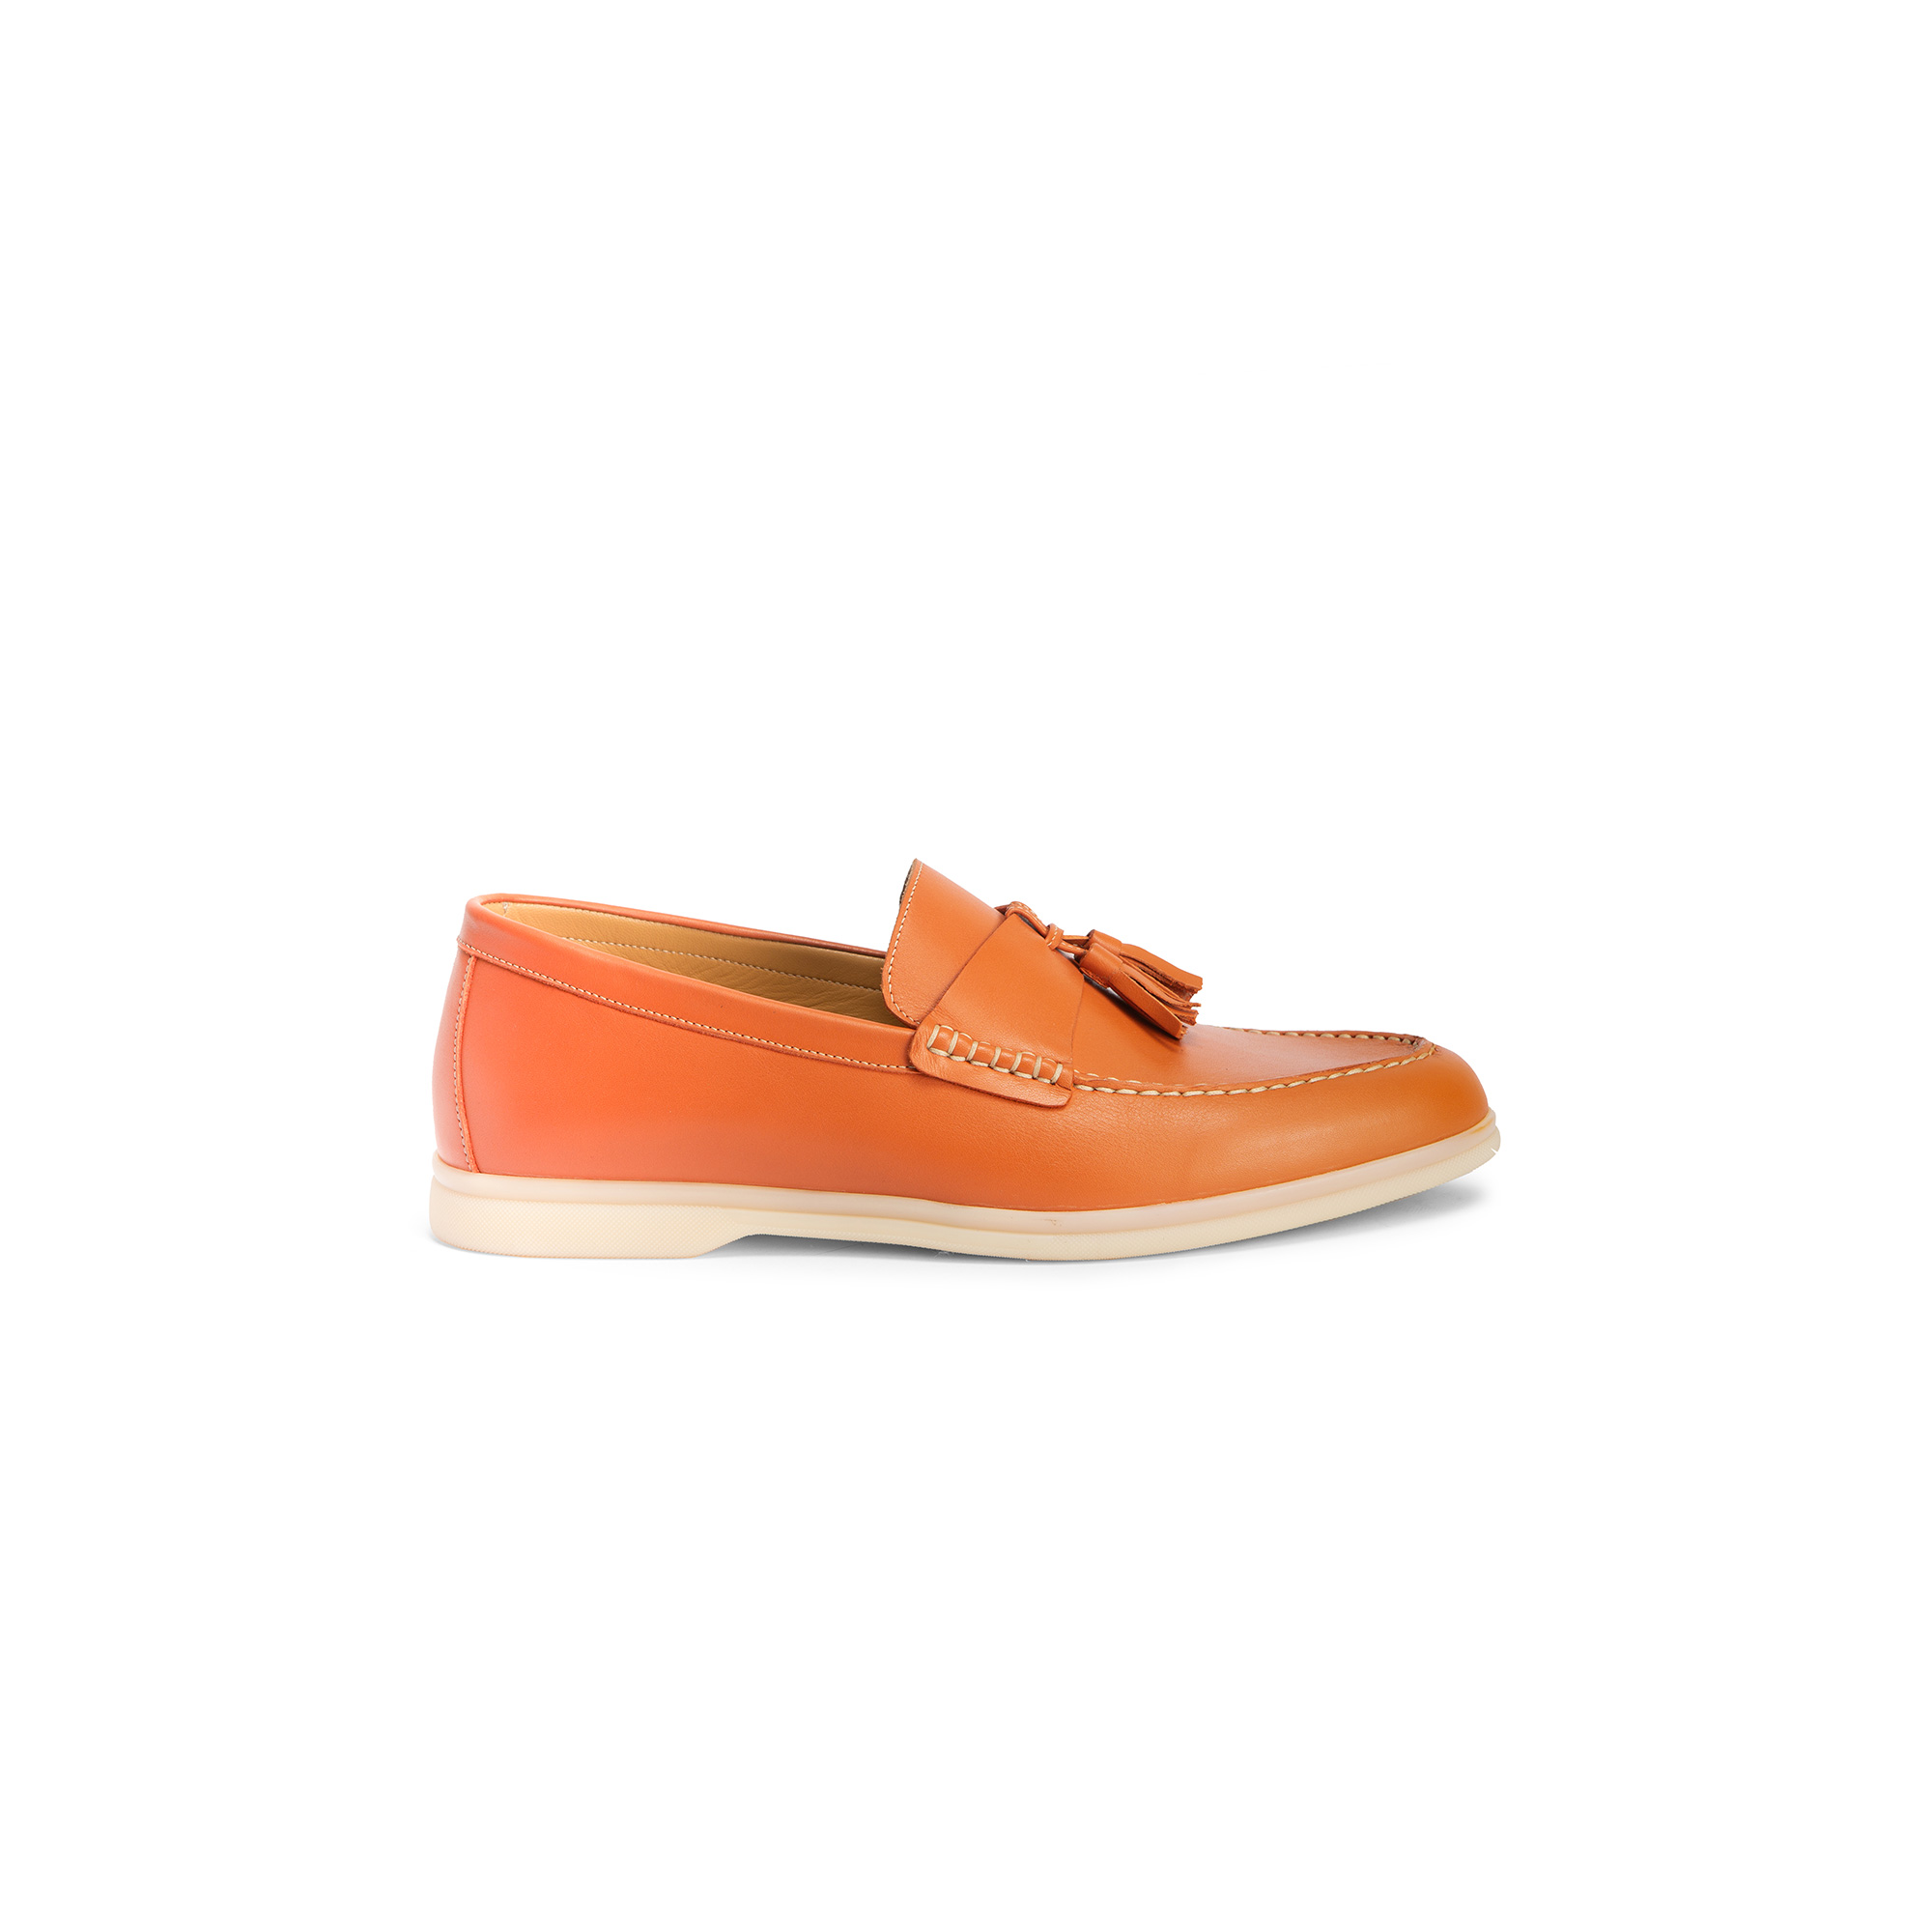 Outside rubber orange calf leather moccasin - Farfalla italian slippers